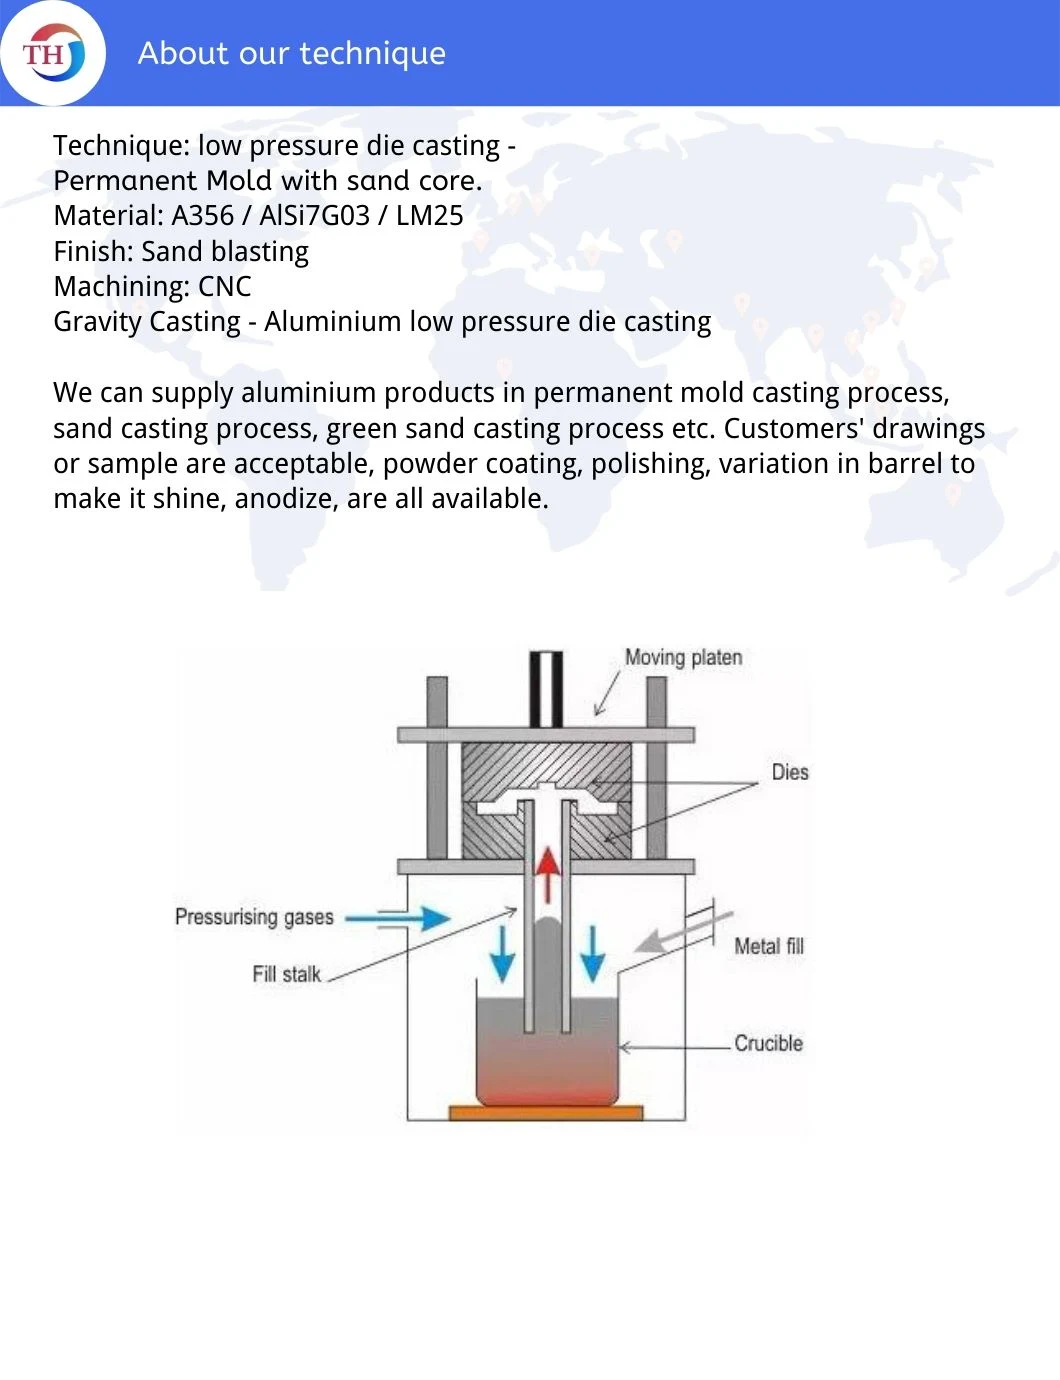 Gravity Casting and Low Pressure Die Casting Aluminum Parts